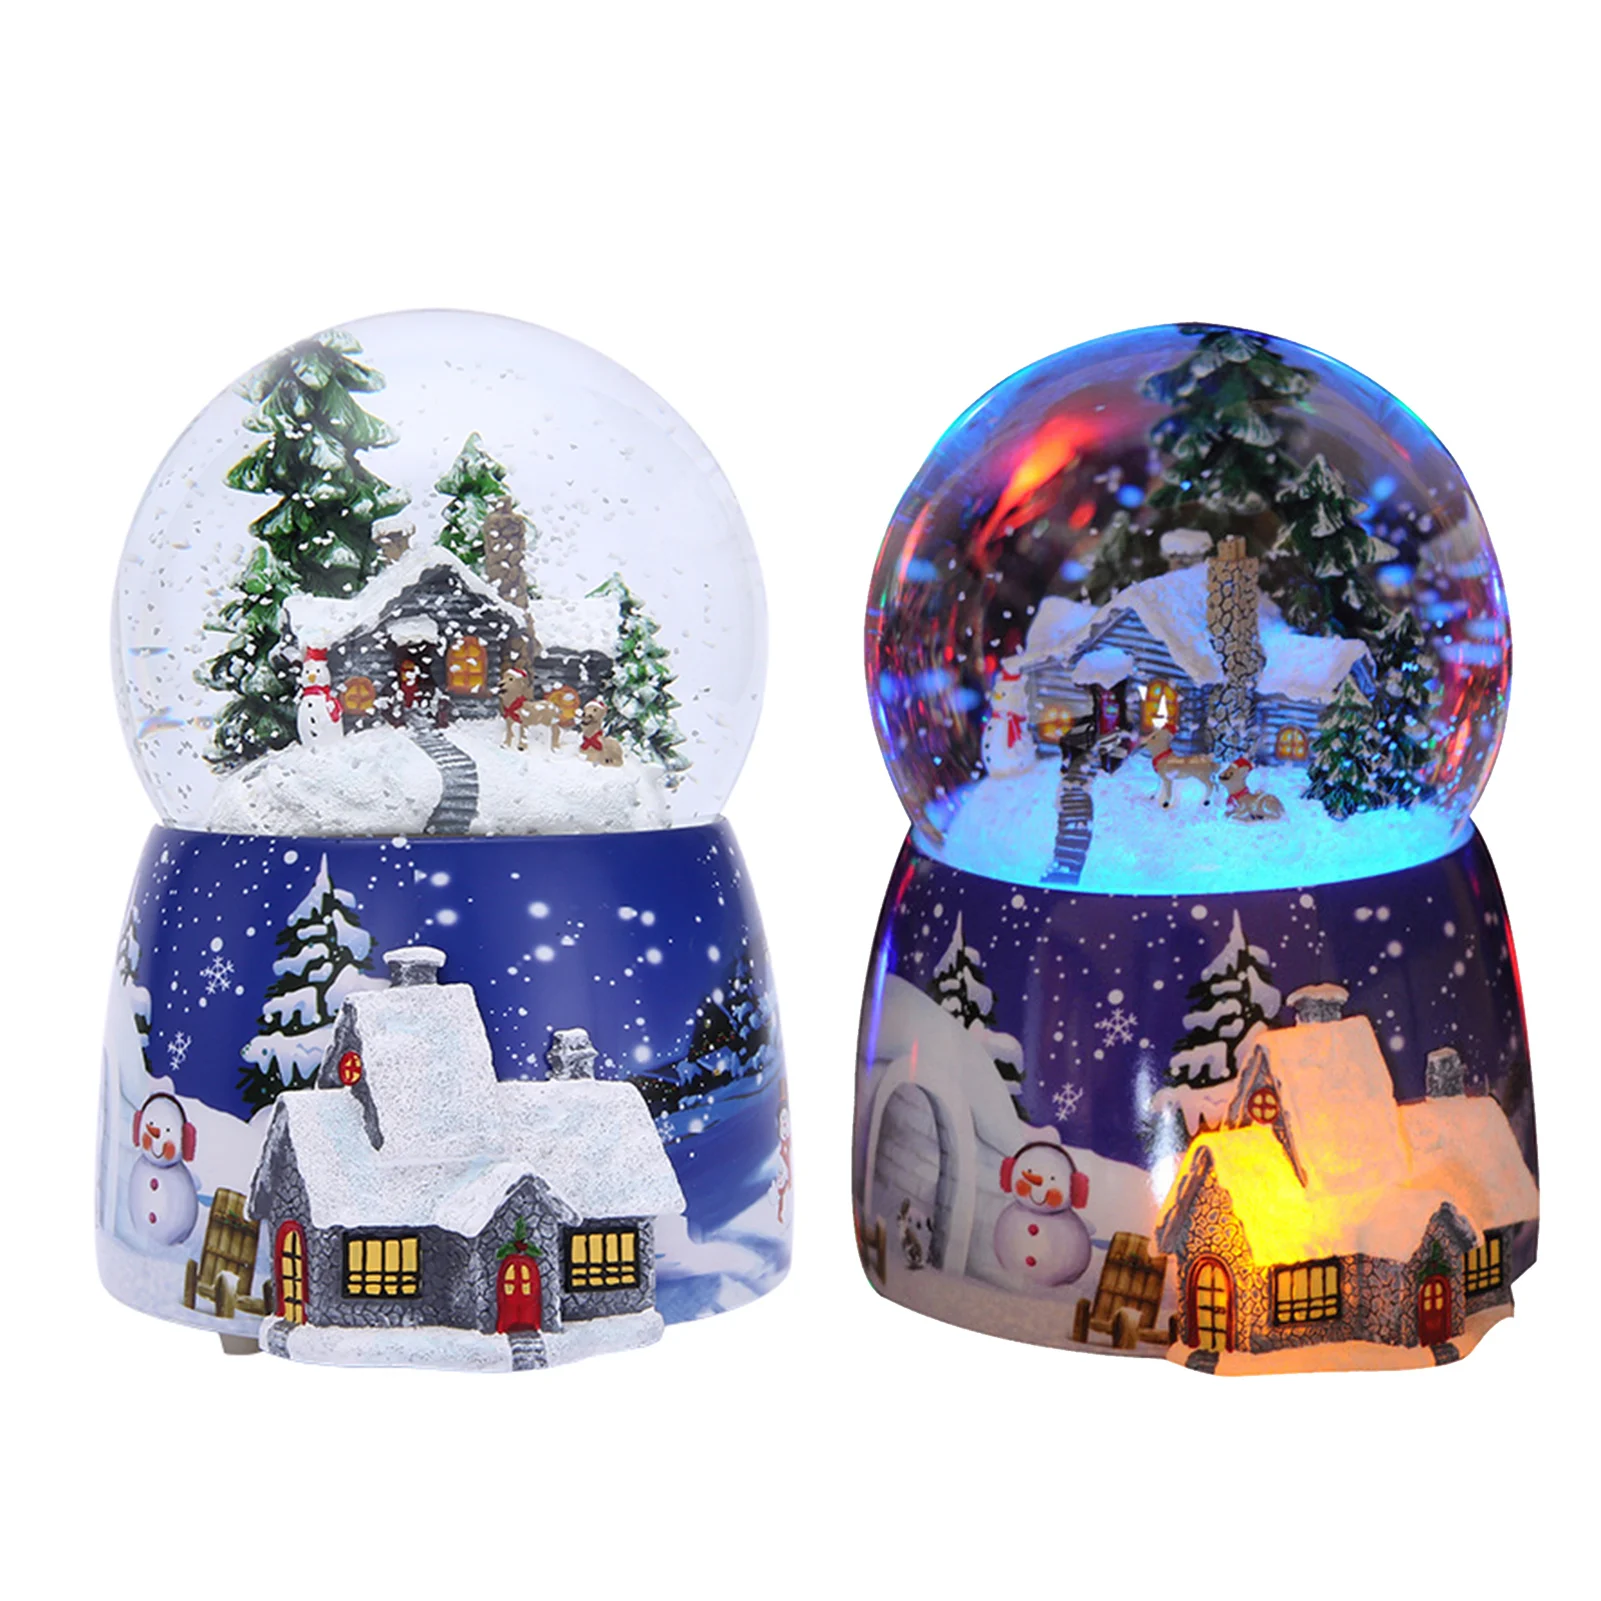 MRlegendary Christmas Snow Globe Rotatable Luminous Crystal Ball Music Box With Snow House Scene Santa Claus Elk Train Christmas Decoration Gifts For Children 